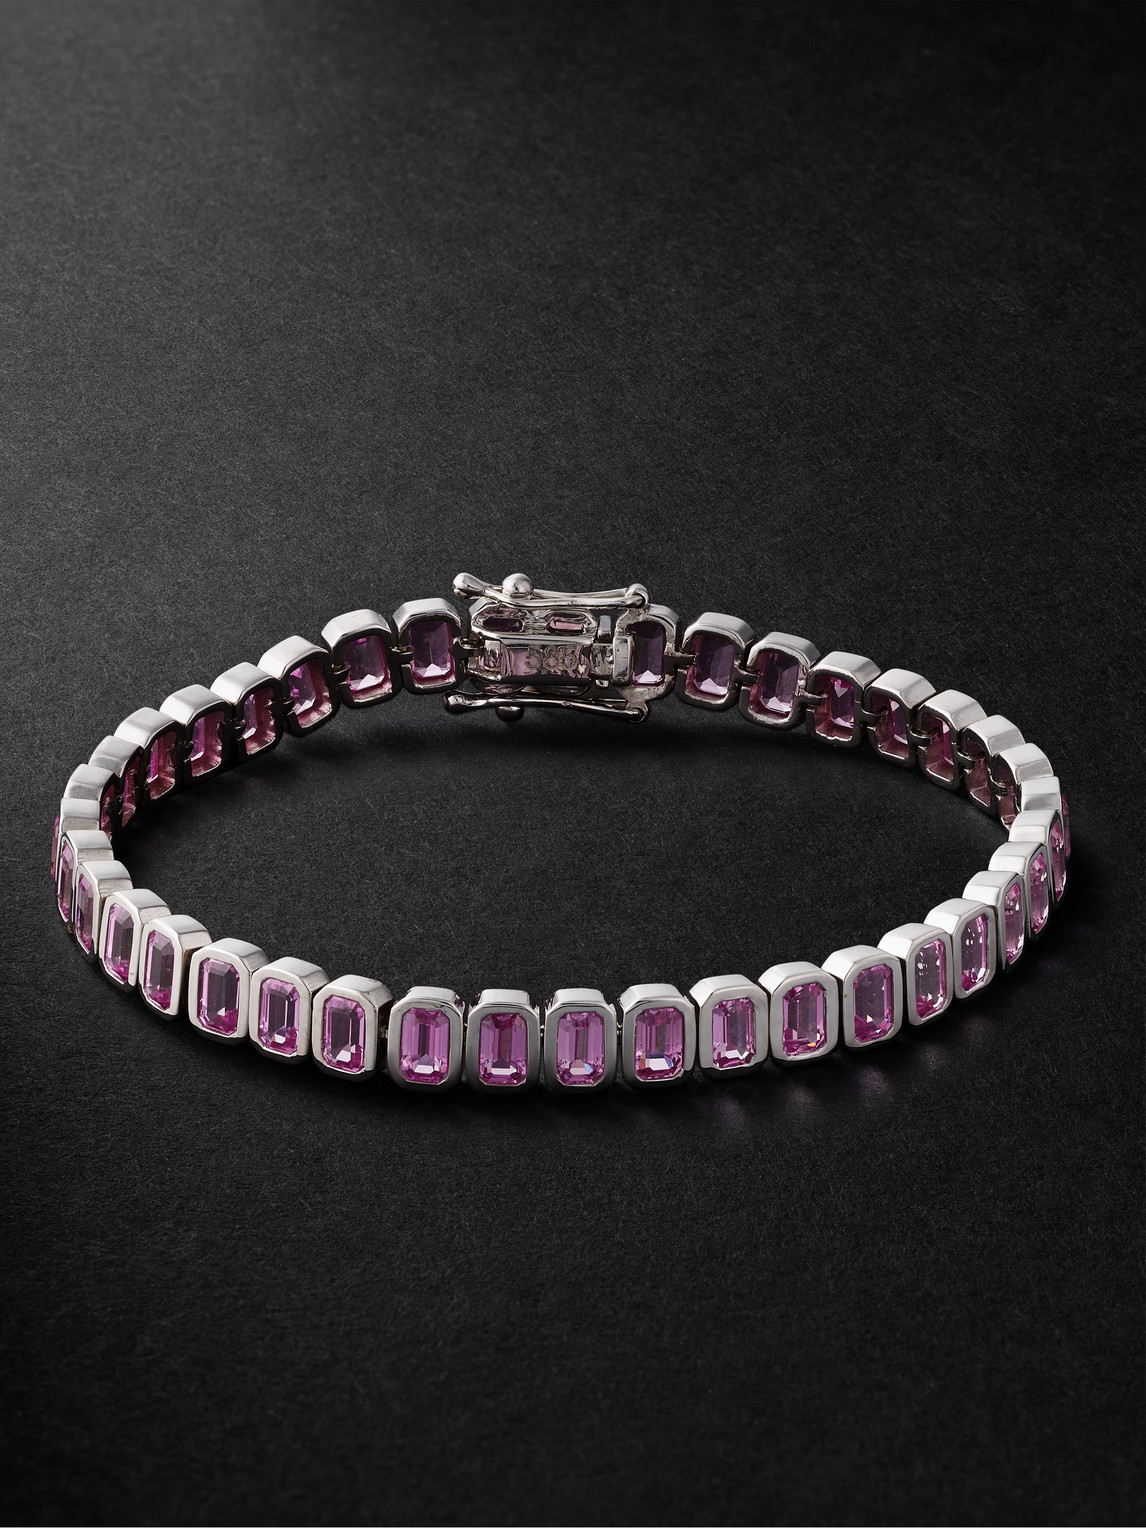 14-Karat White Gold Pink Sapphire Tennis Bracelet